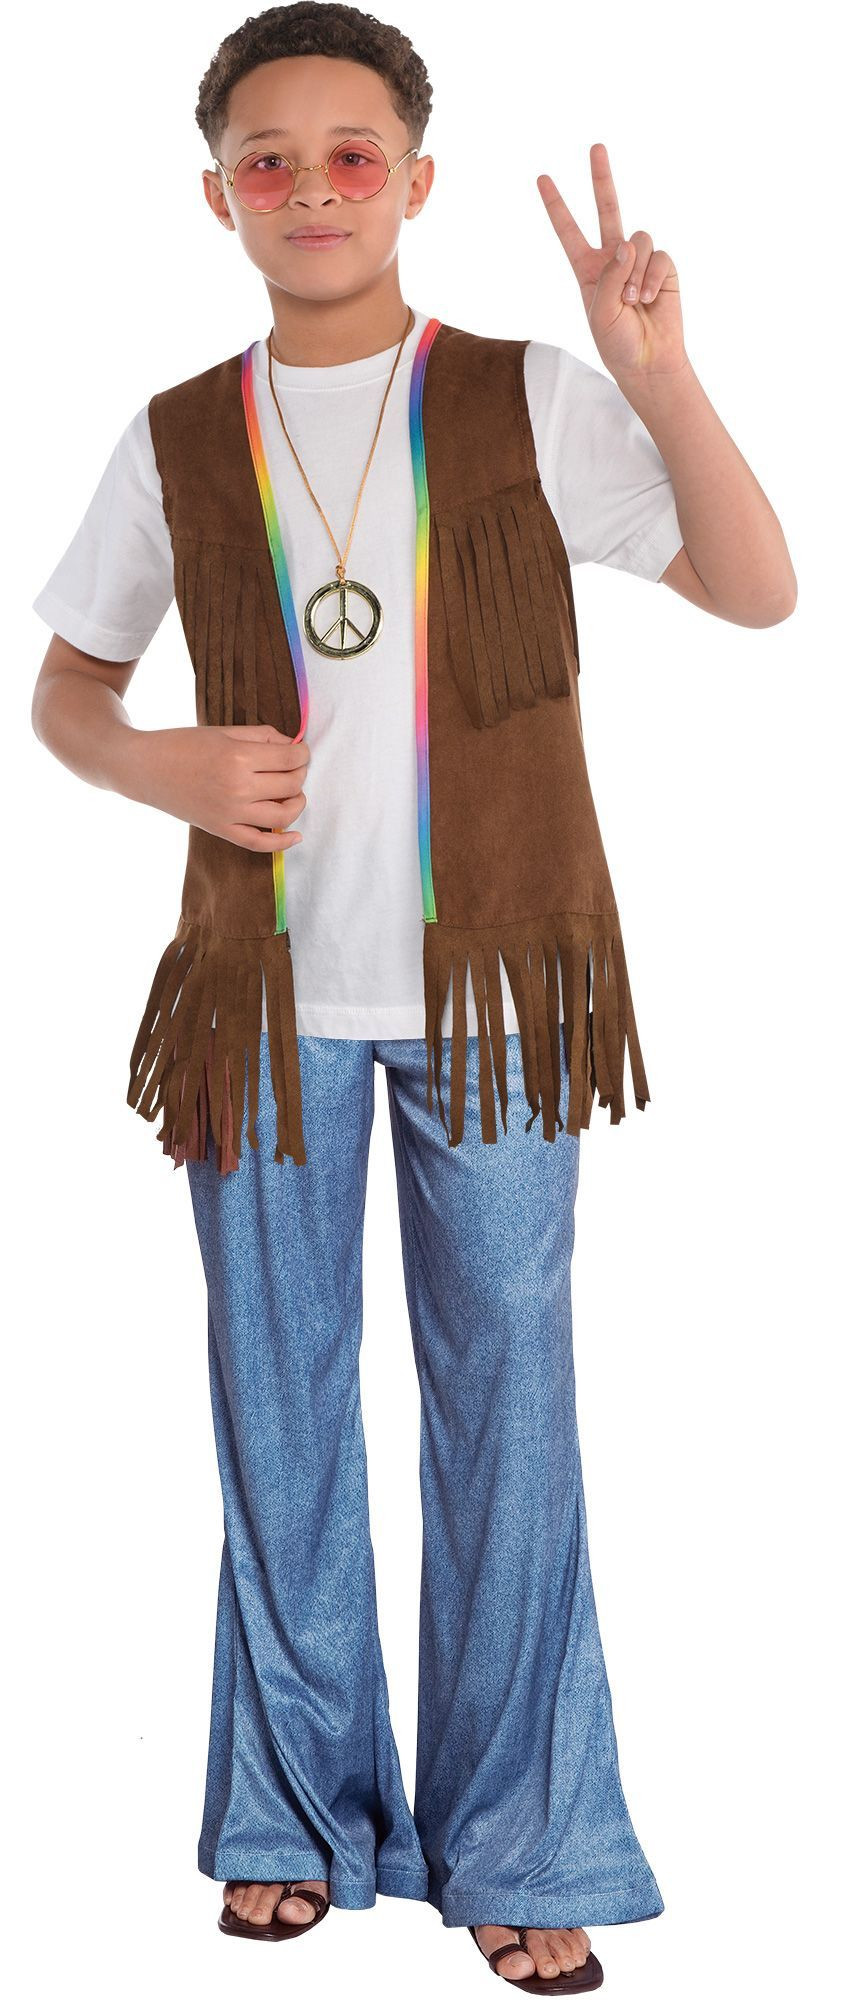 DIY 60S Costumes
 DIY Hippie costume in 2019